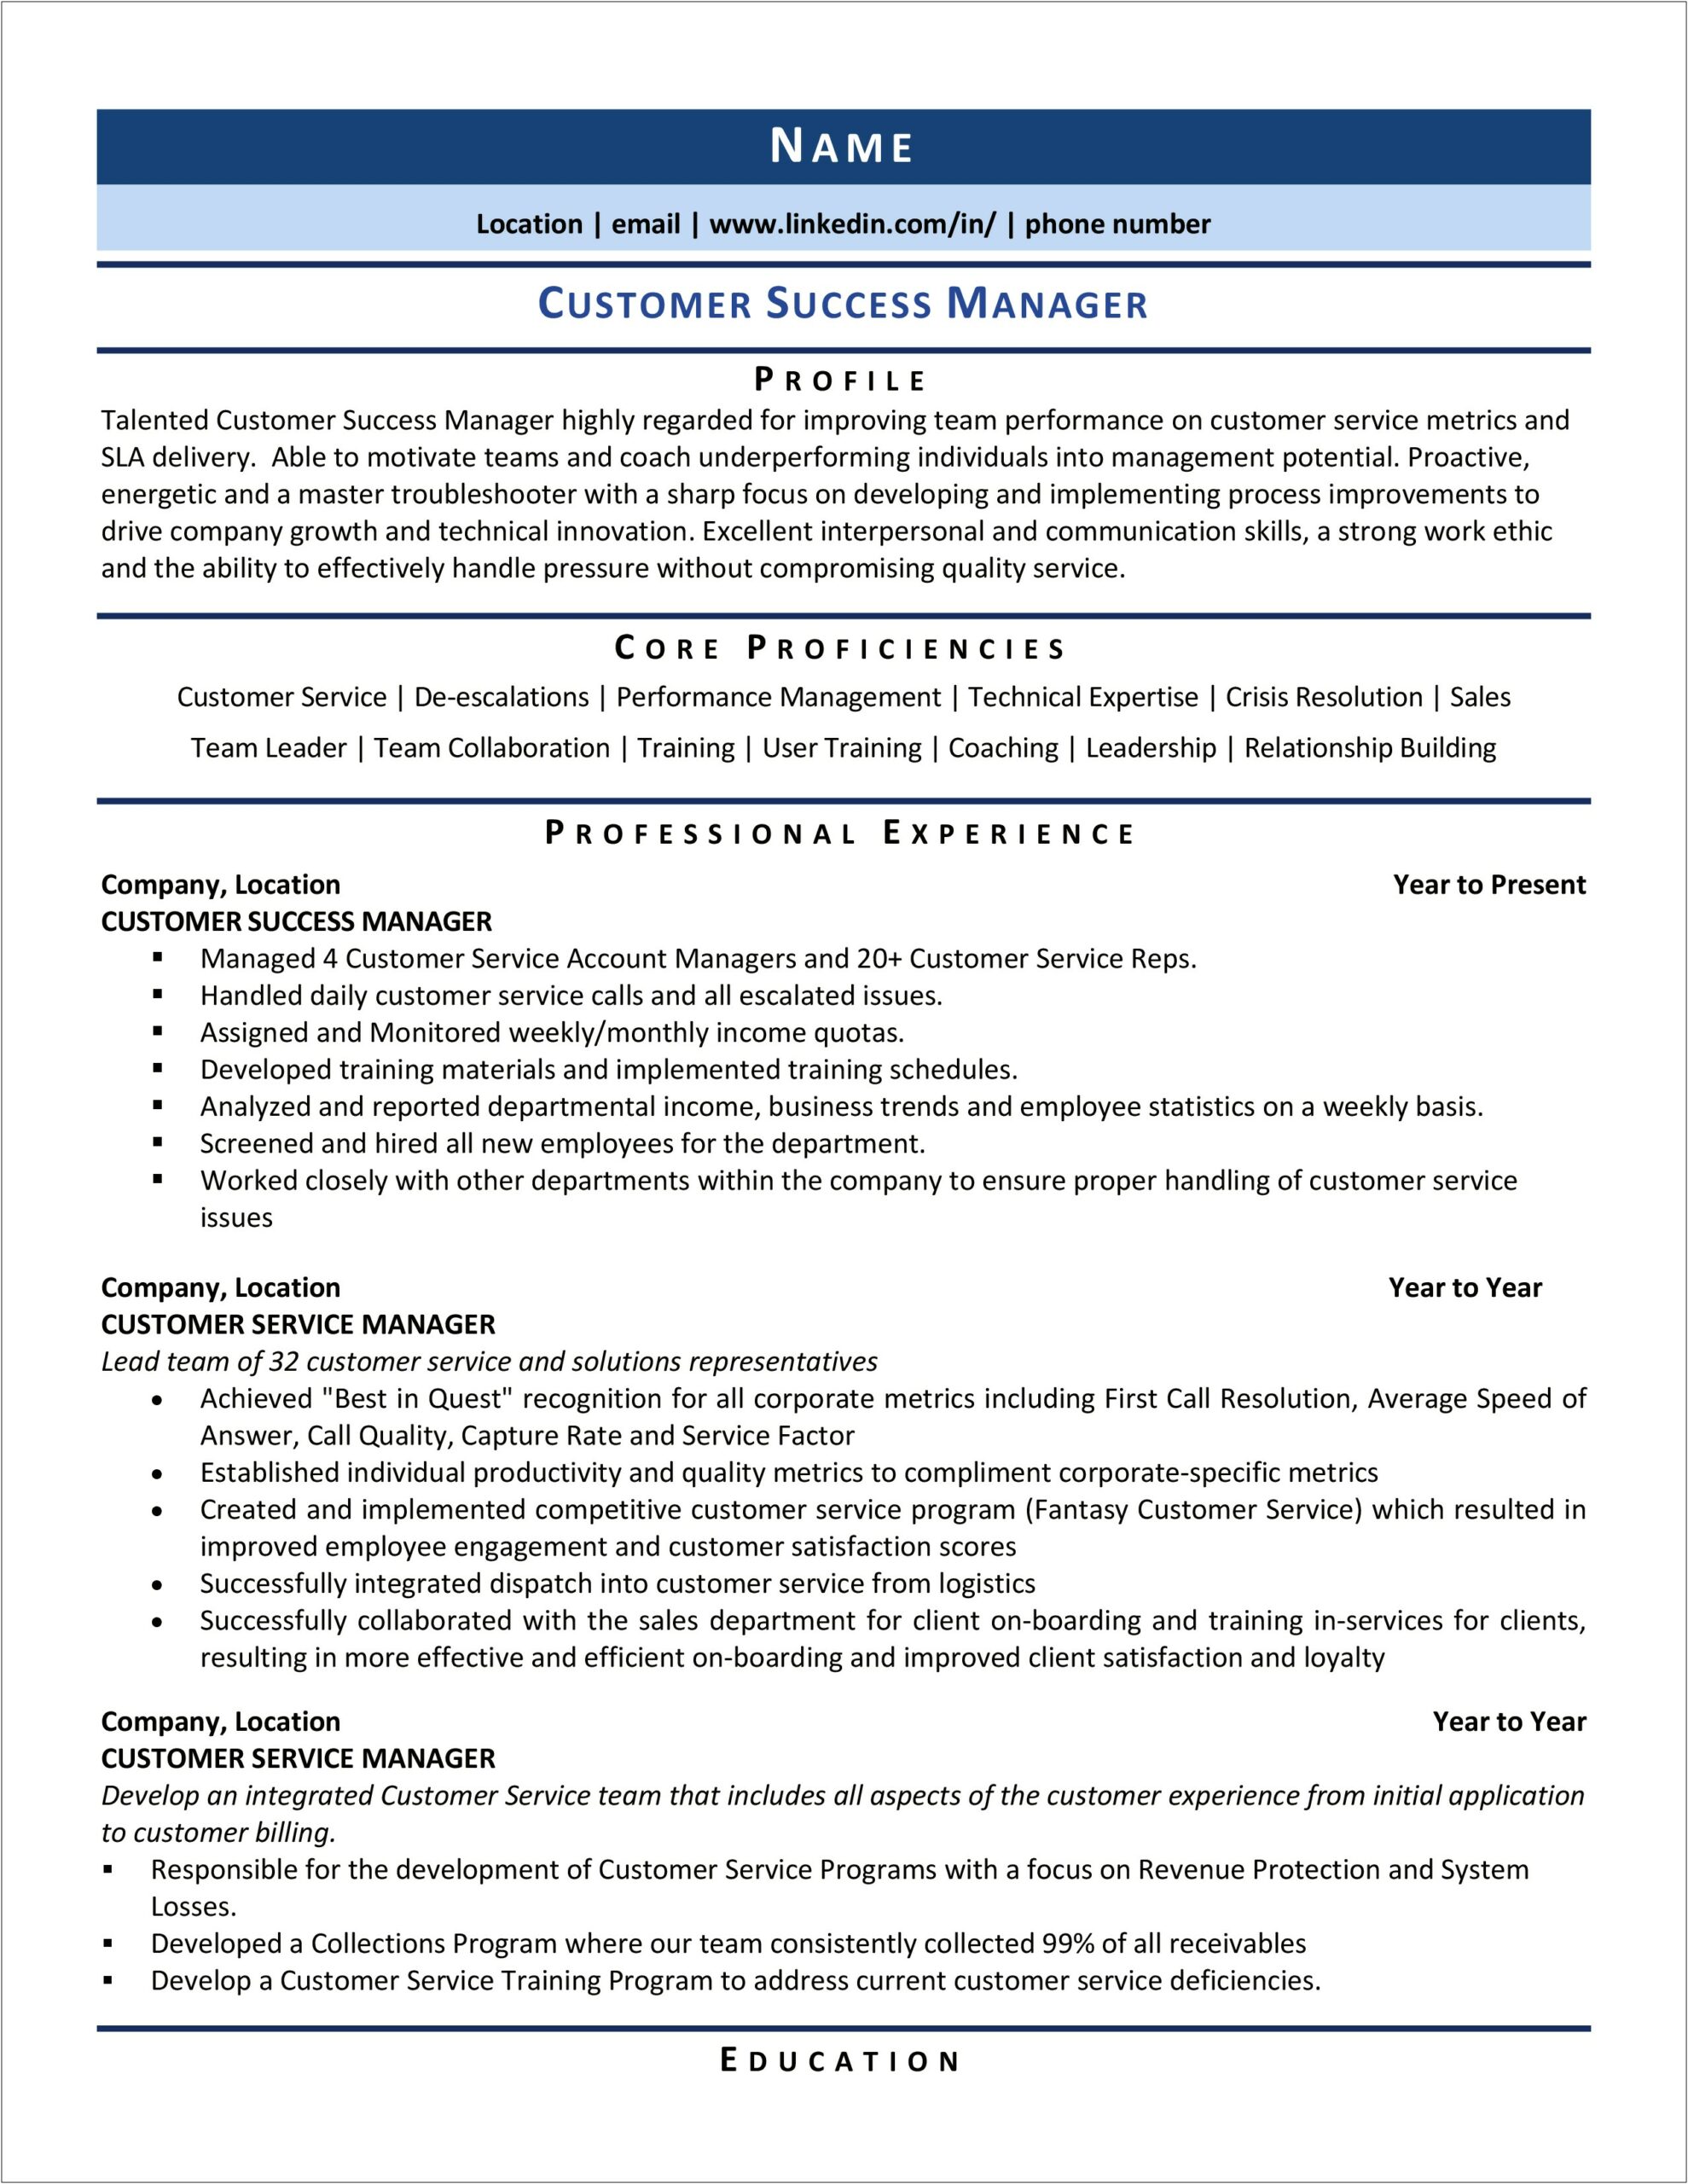 Customer Service Manager Skills Resume